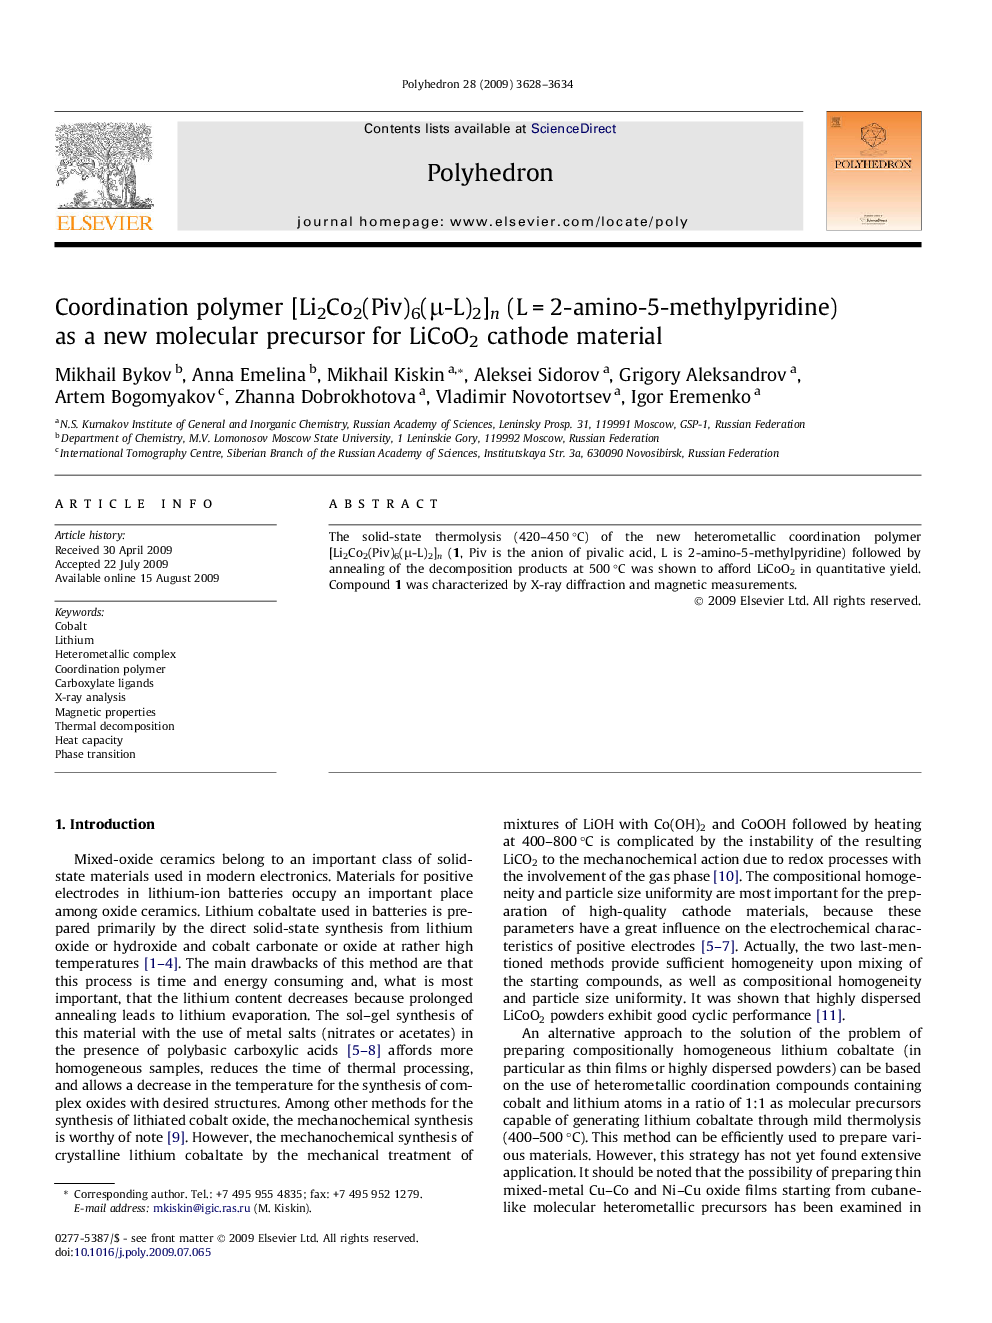 Coordination polymer [Li2Co2(Piv)6(μ-L)2]n (L = 2-amino-5-methylpyridine) as a new molecular precursor for LiCoO2 cathode material